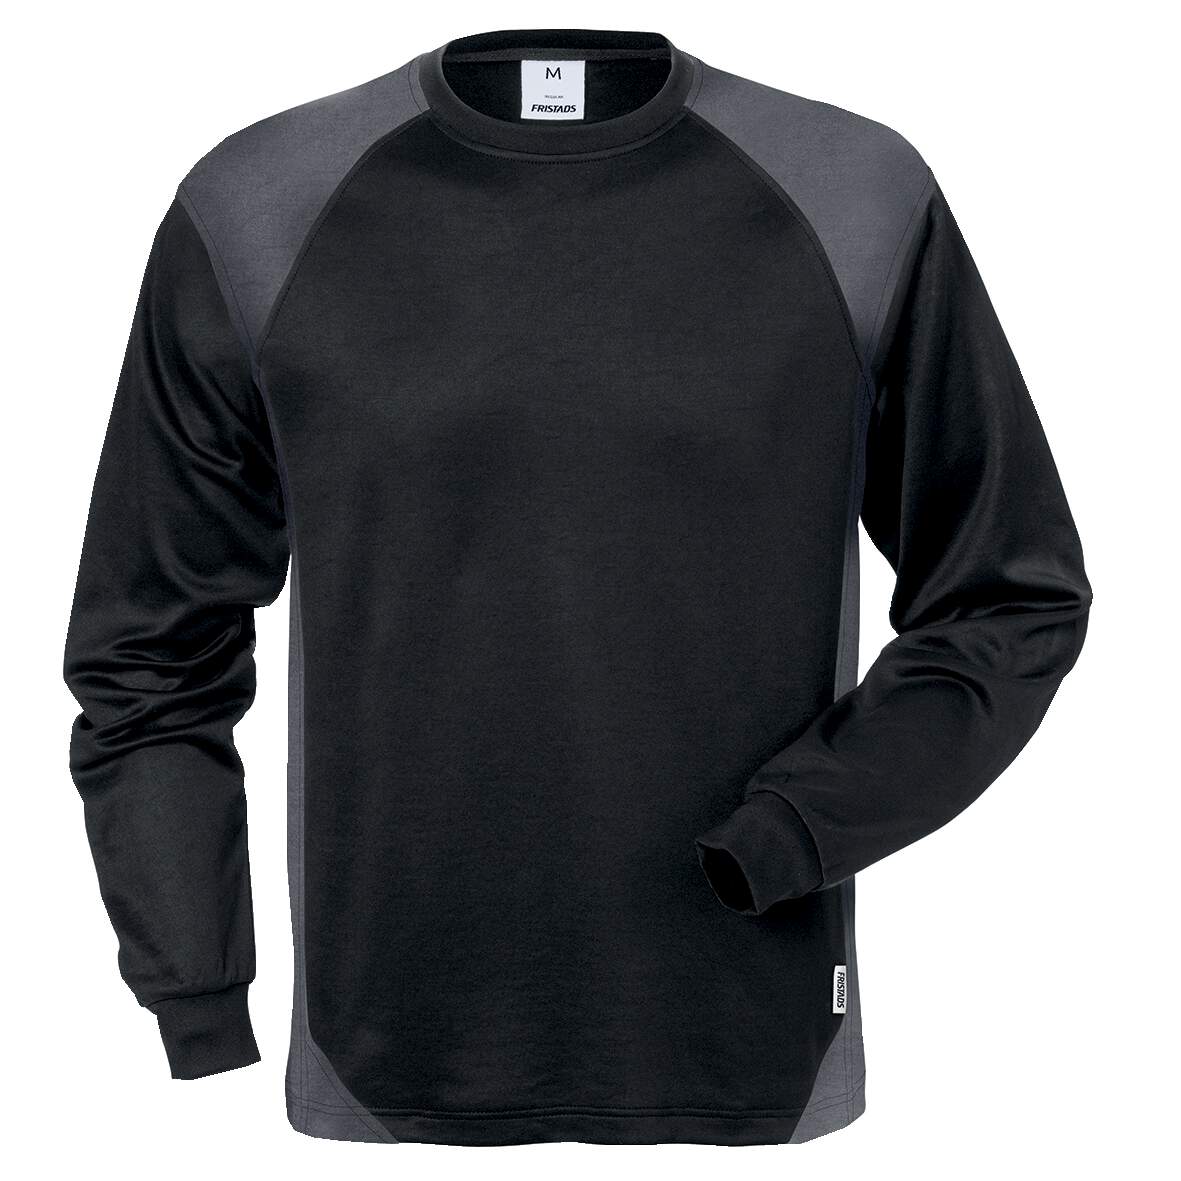 1254409 - T-Shirt schwarz/grau Gr.XS FUSION 7071